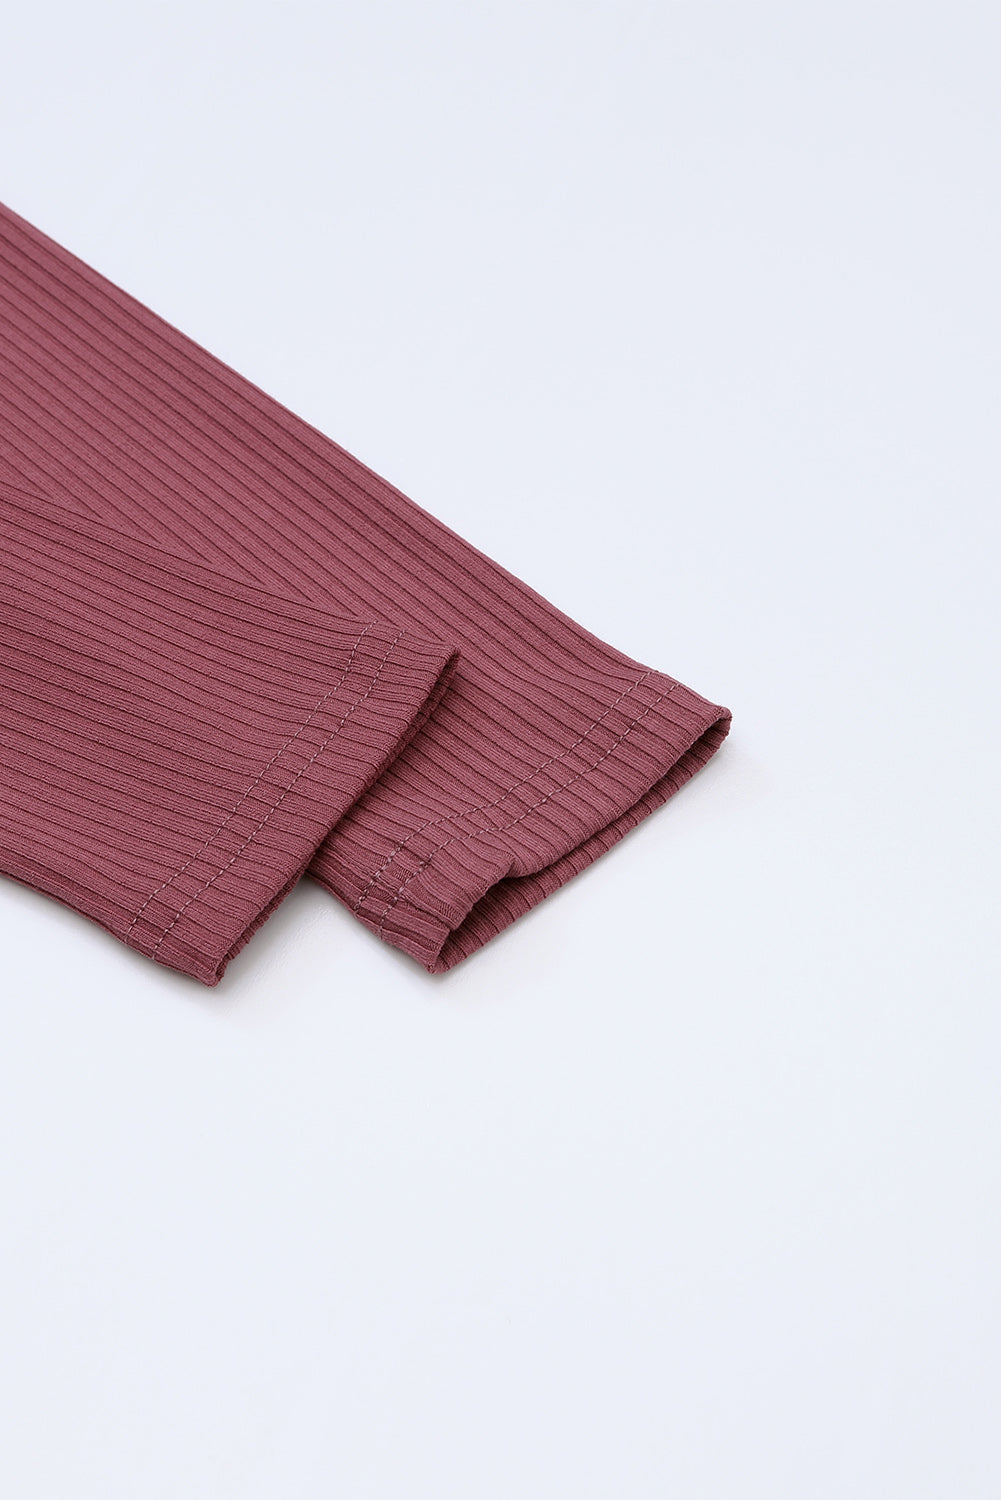 Solid Color Ribbed Crop Top Long Pants Set